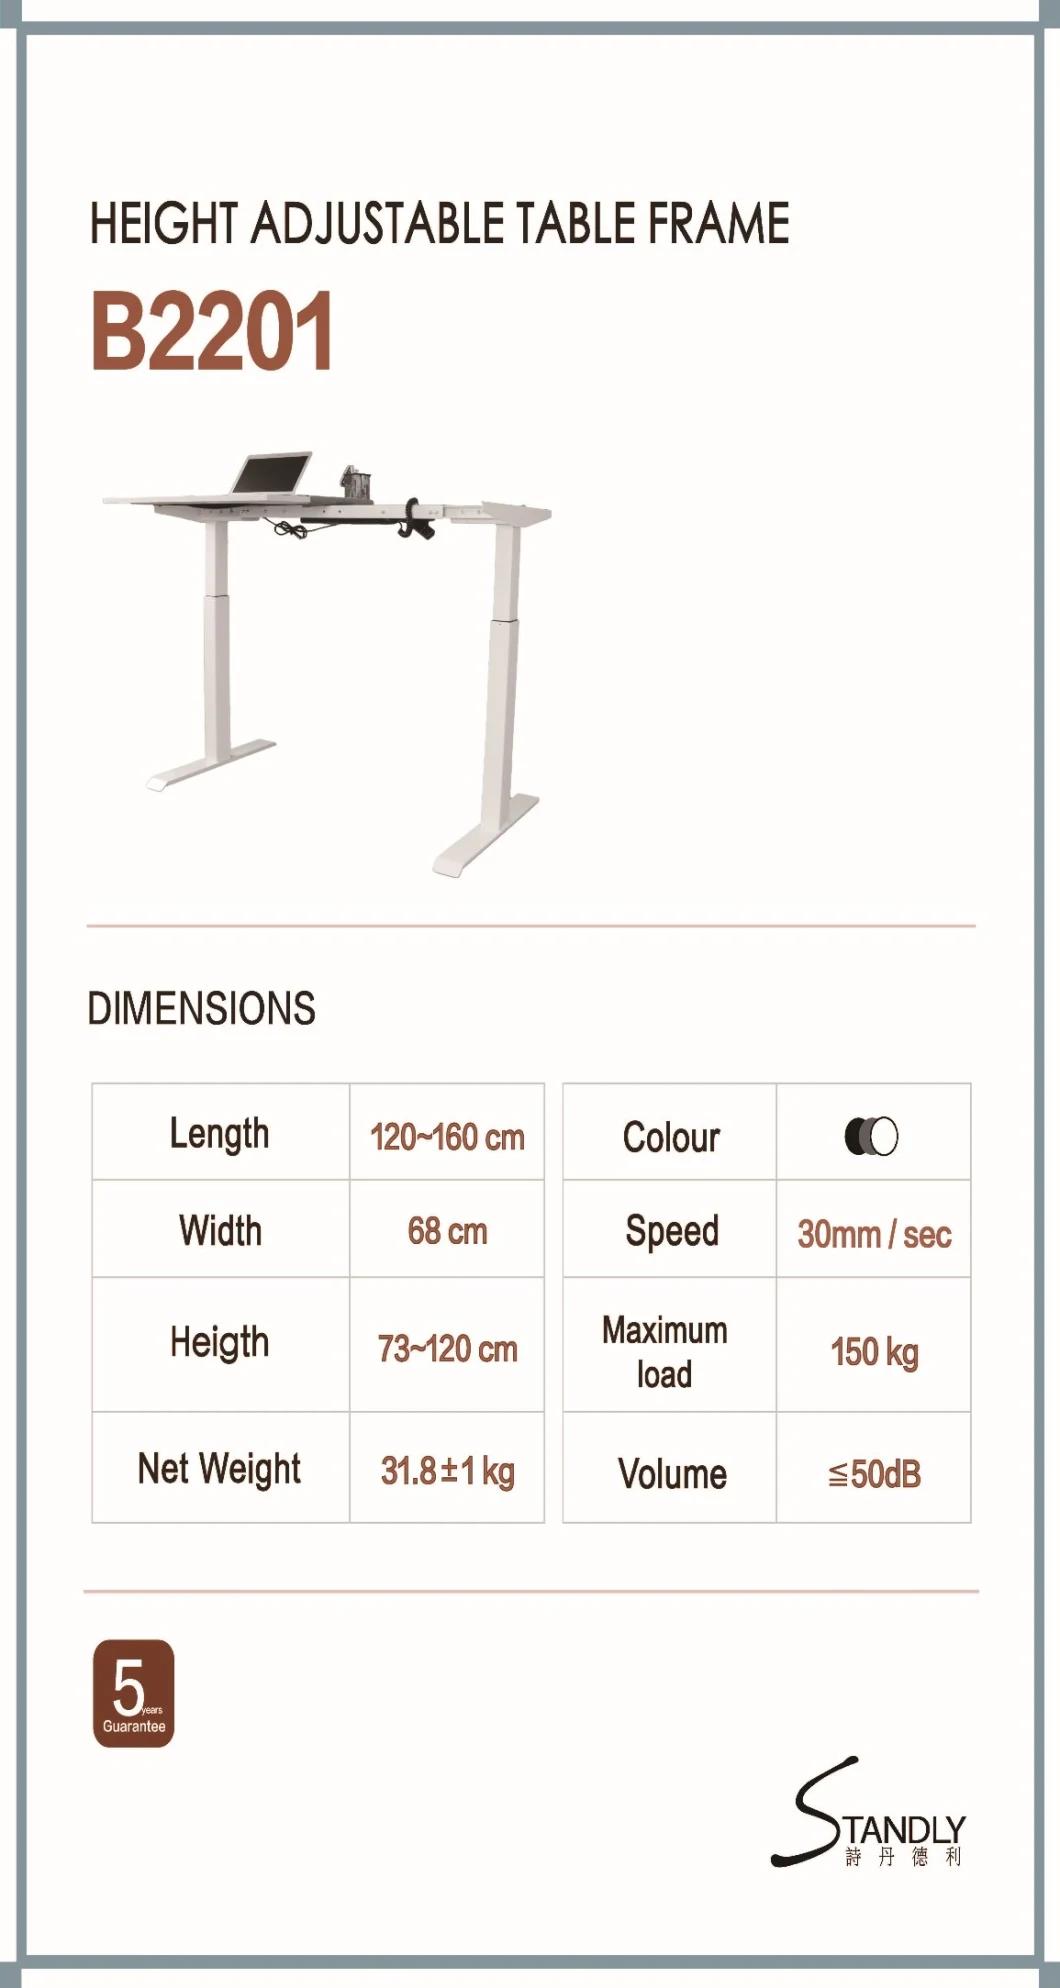 Smart Electric Lift Table Standing Computer Desk Home Desk Mobile Desk Bedroom Learning Desk Office Desk Height Adjustable Table with Single Motor